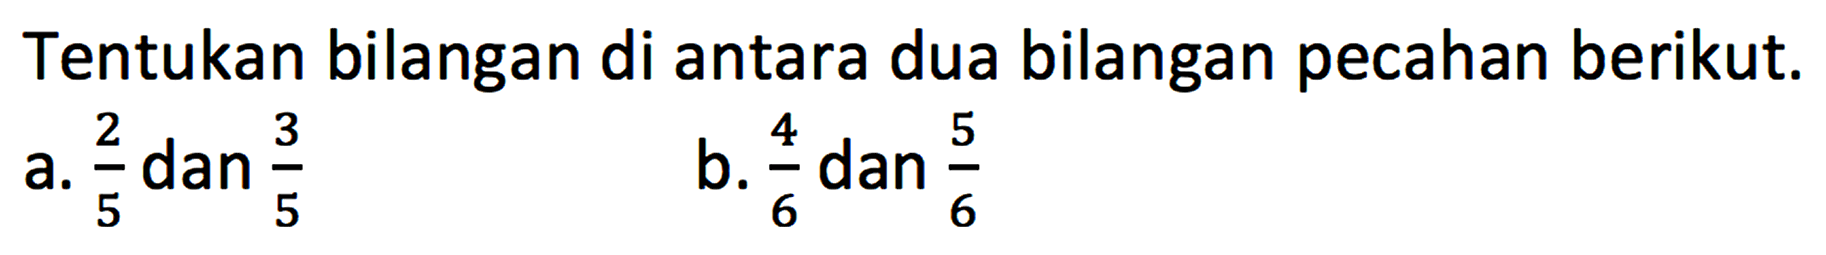 Tentukan bilangan di antara dua bilangan pecahan berikut; a. 2/5 dan 3/5 b. 4/6 dan 5/6